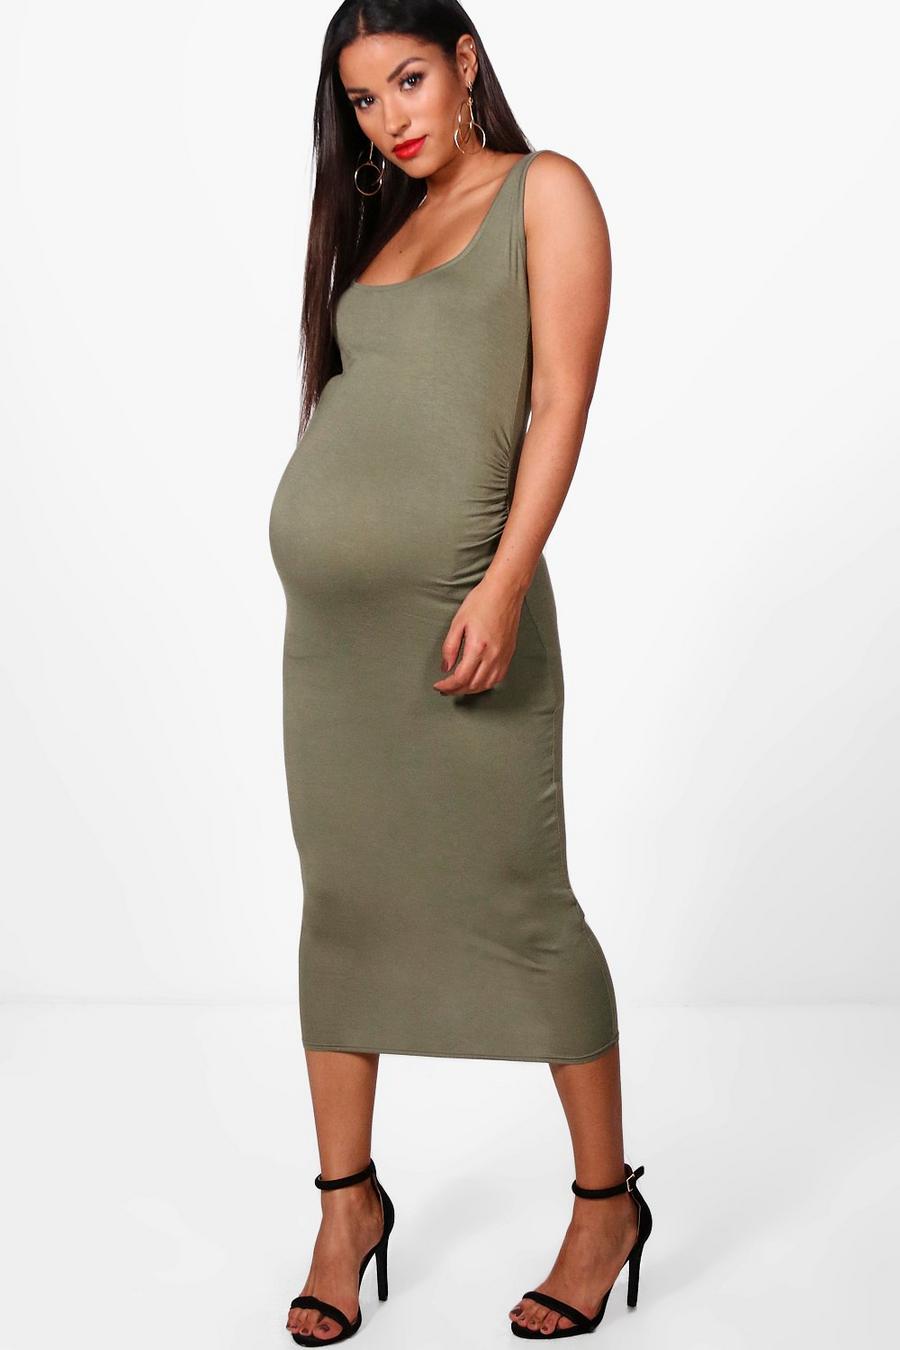 https://media.boohoo.com/i/boohoo/bzz49479_khaki_xl/female-khaki-maternity-bodycon-dress/?w=900&qlt=default&fmt.jp2.qlt=70&fmt=auto&sm=fit